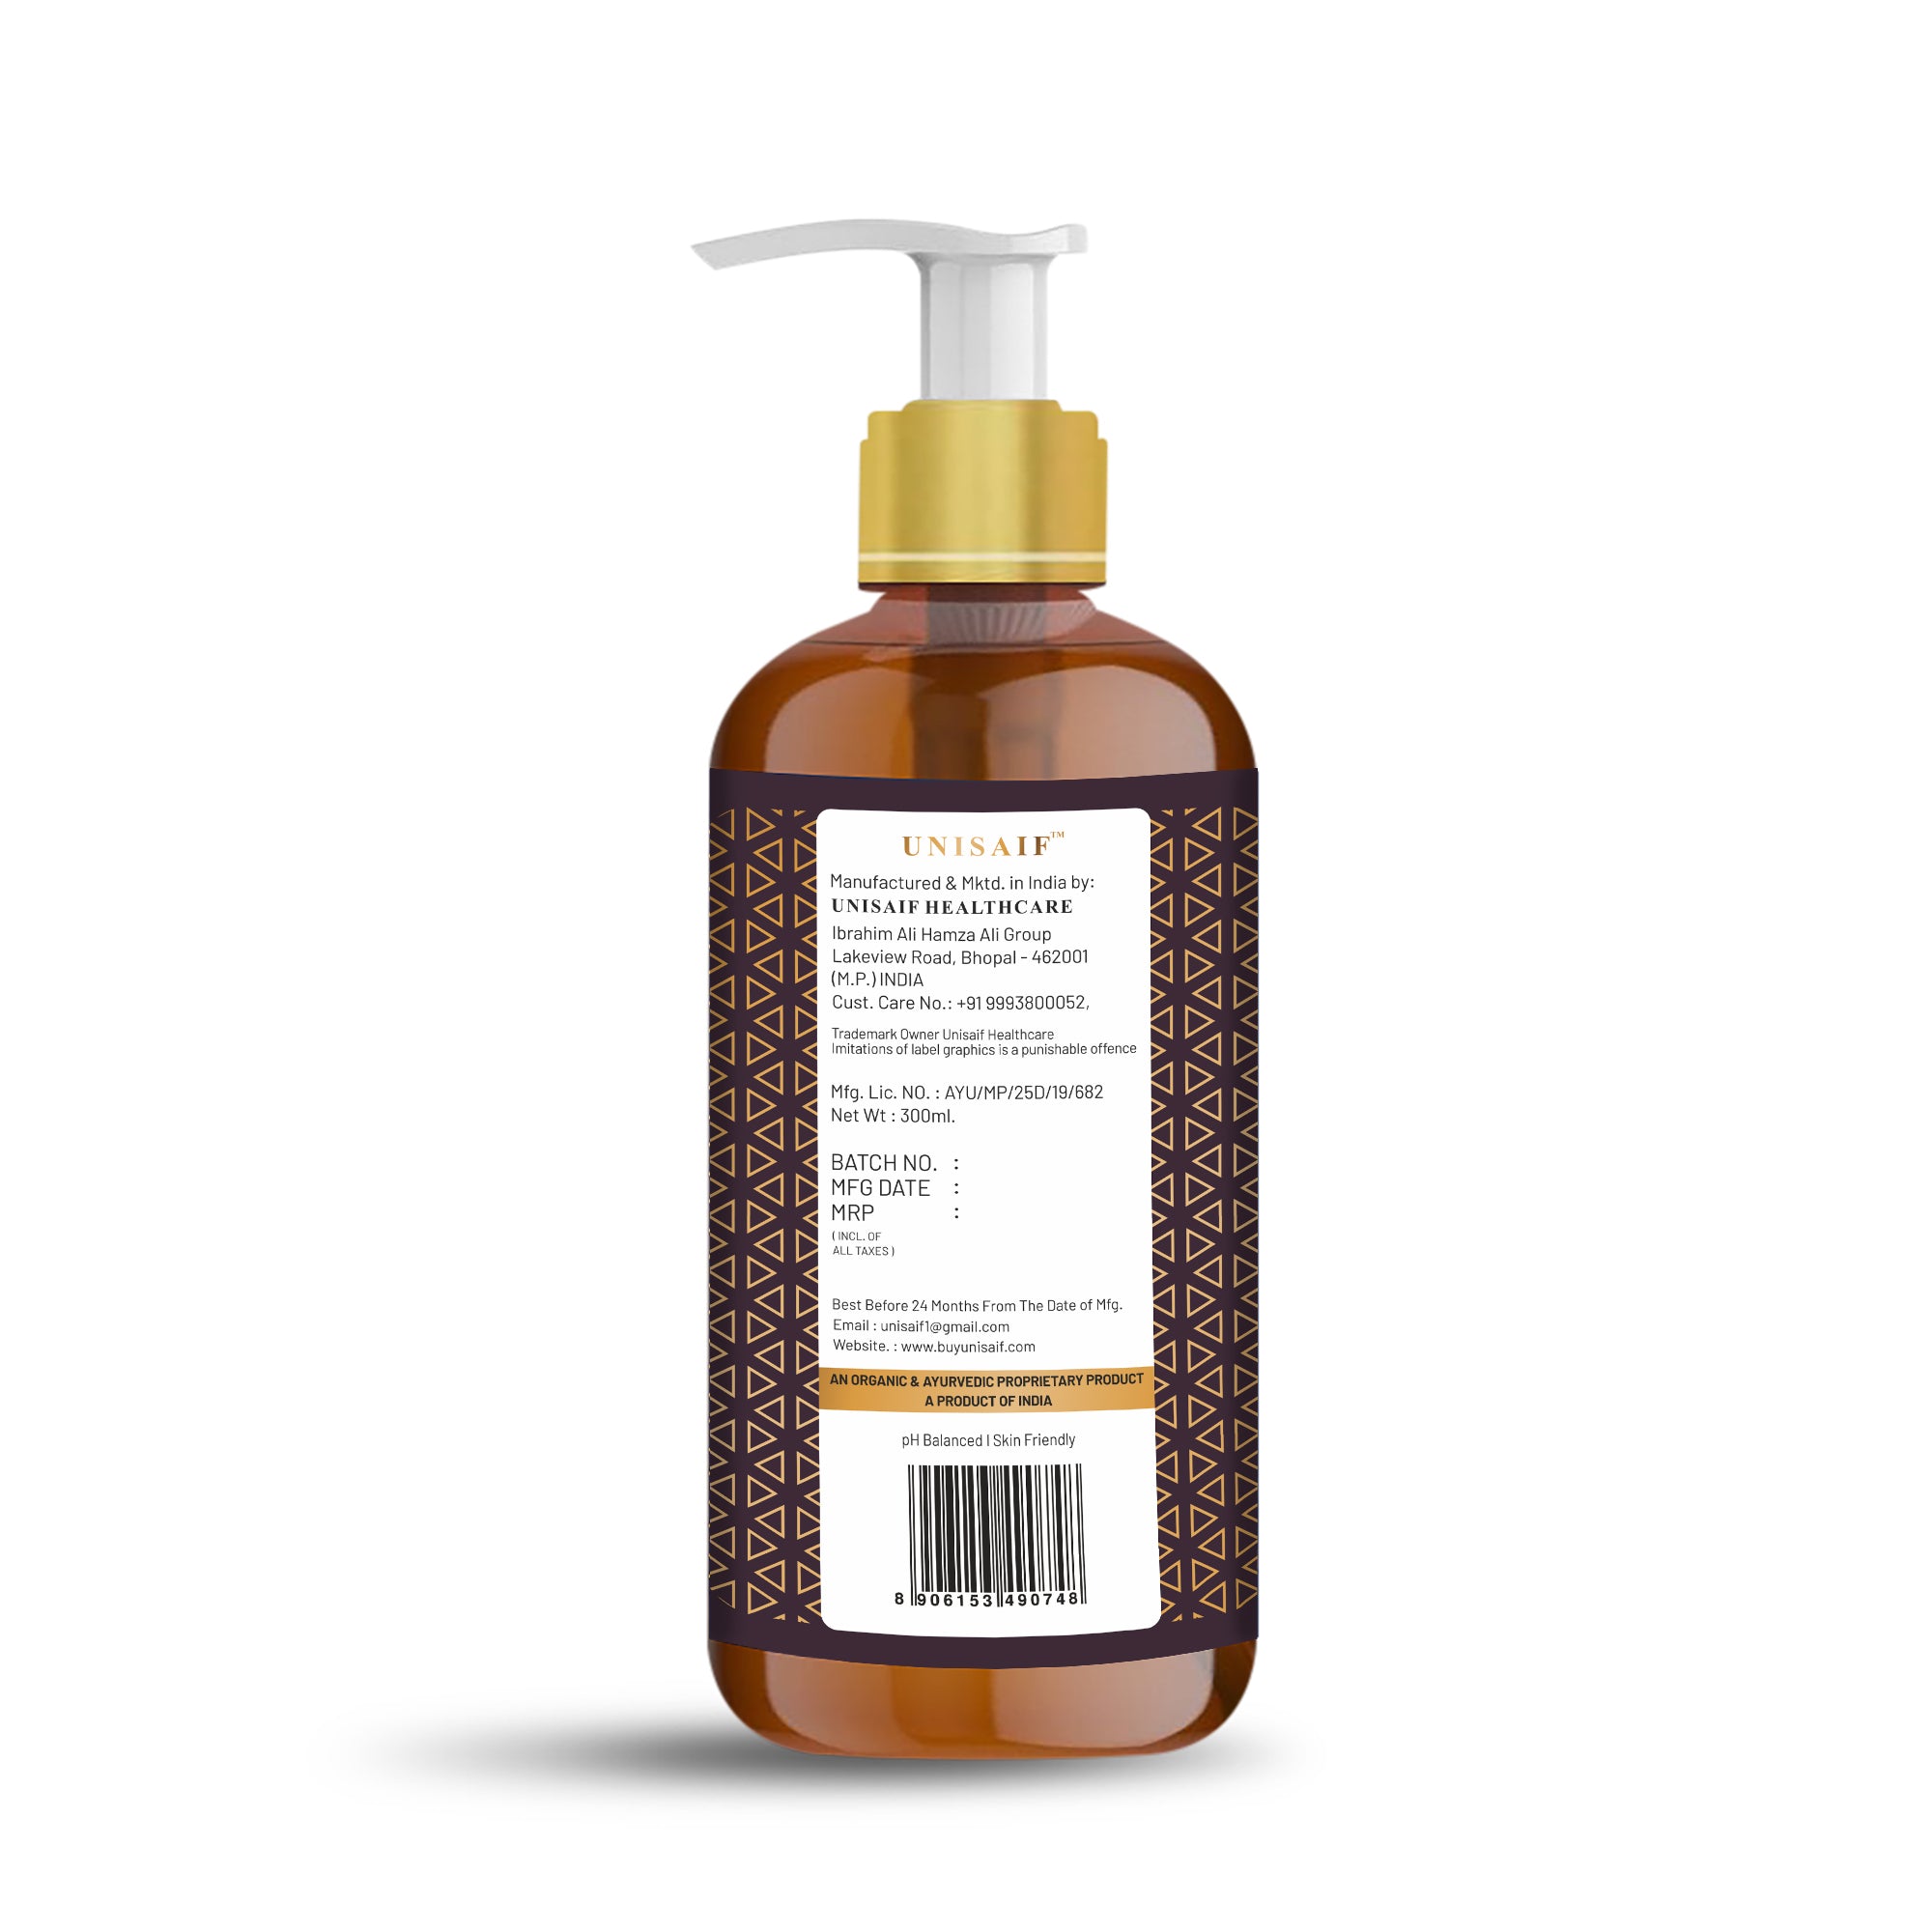 Oud Nazeef Arabian Luxury Organic Body wash (300ml) | Sulphate & Paraben Free| Skin Friendly| Optimum PH| Nourishing